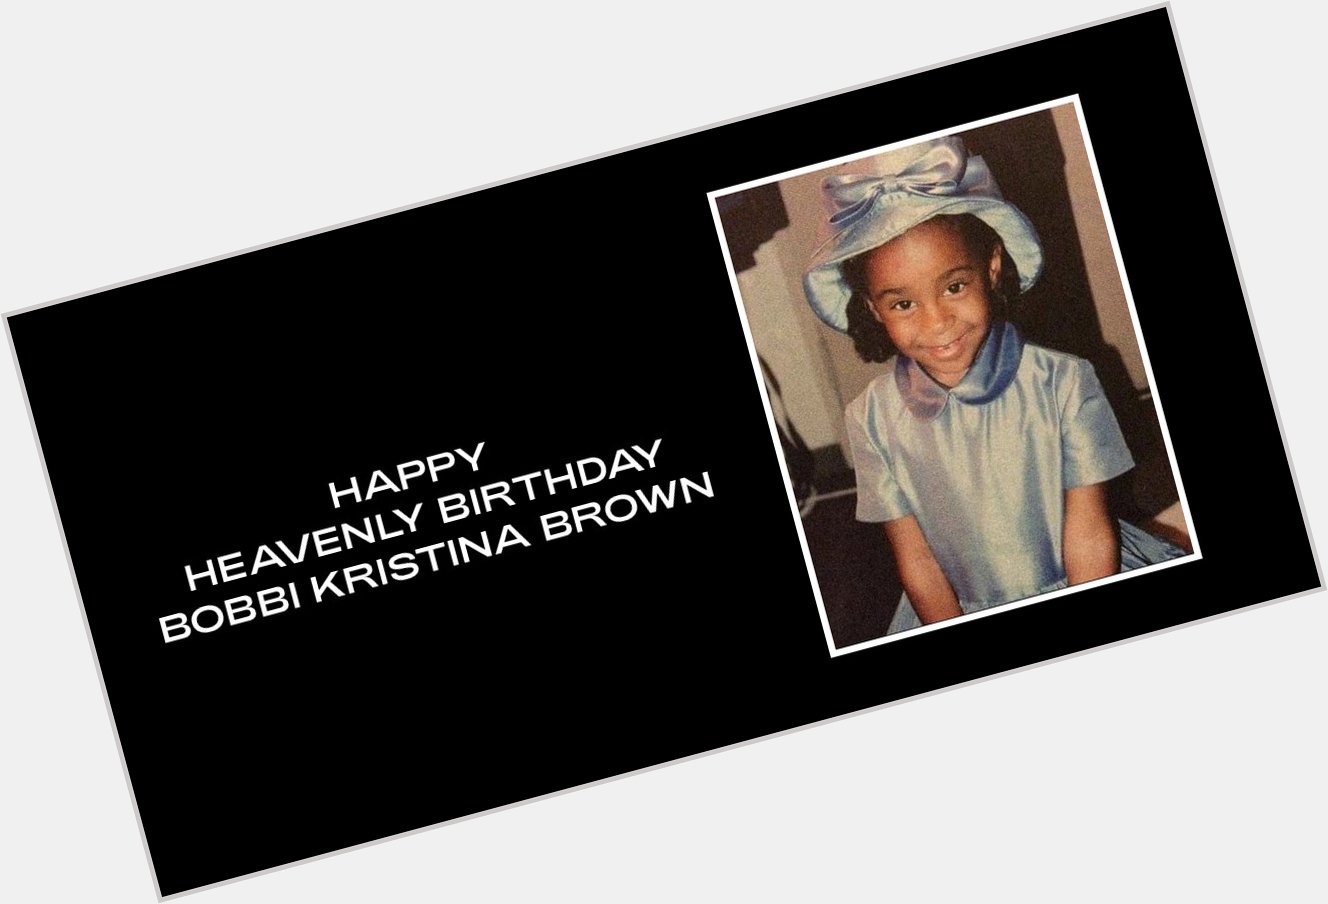 Happy Heavenly Birthday, Bobbi Kristina Brown. 